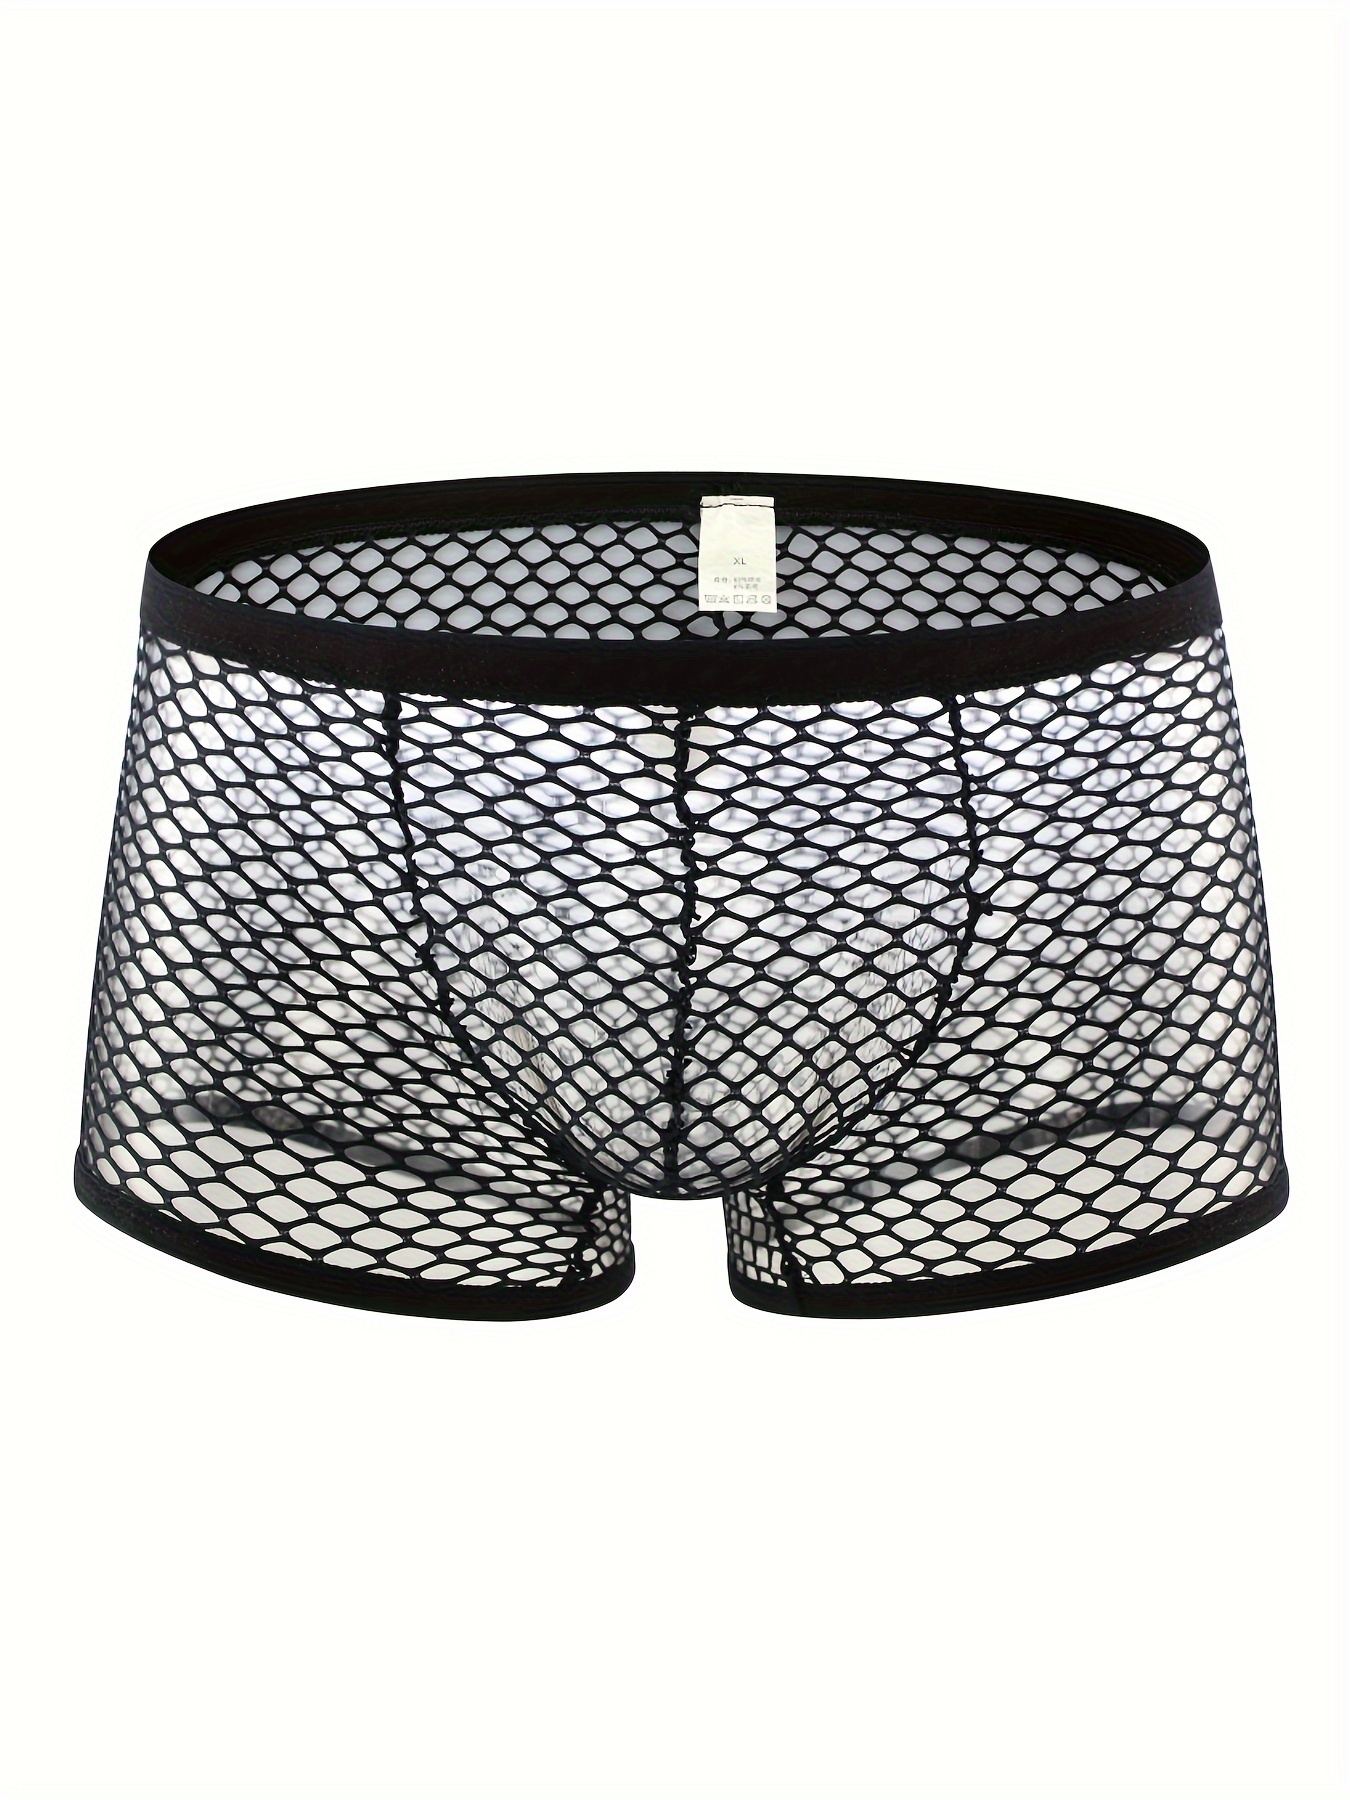 Underwear Briefs Mesh Net Hollow Male Transparent Bikini